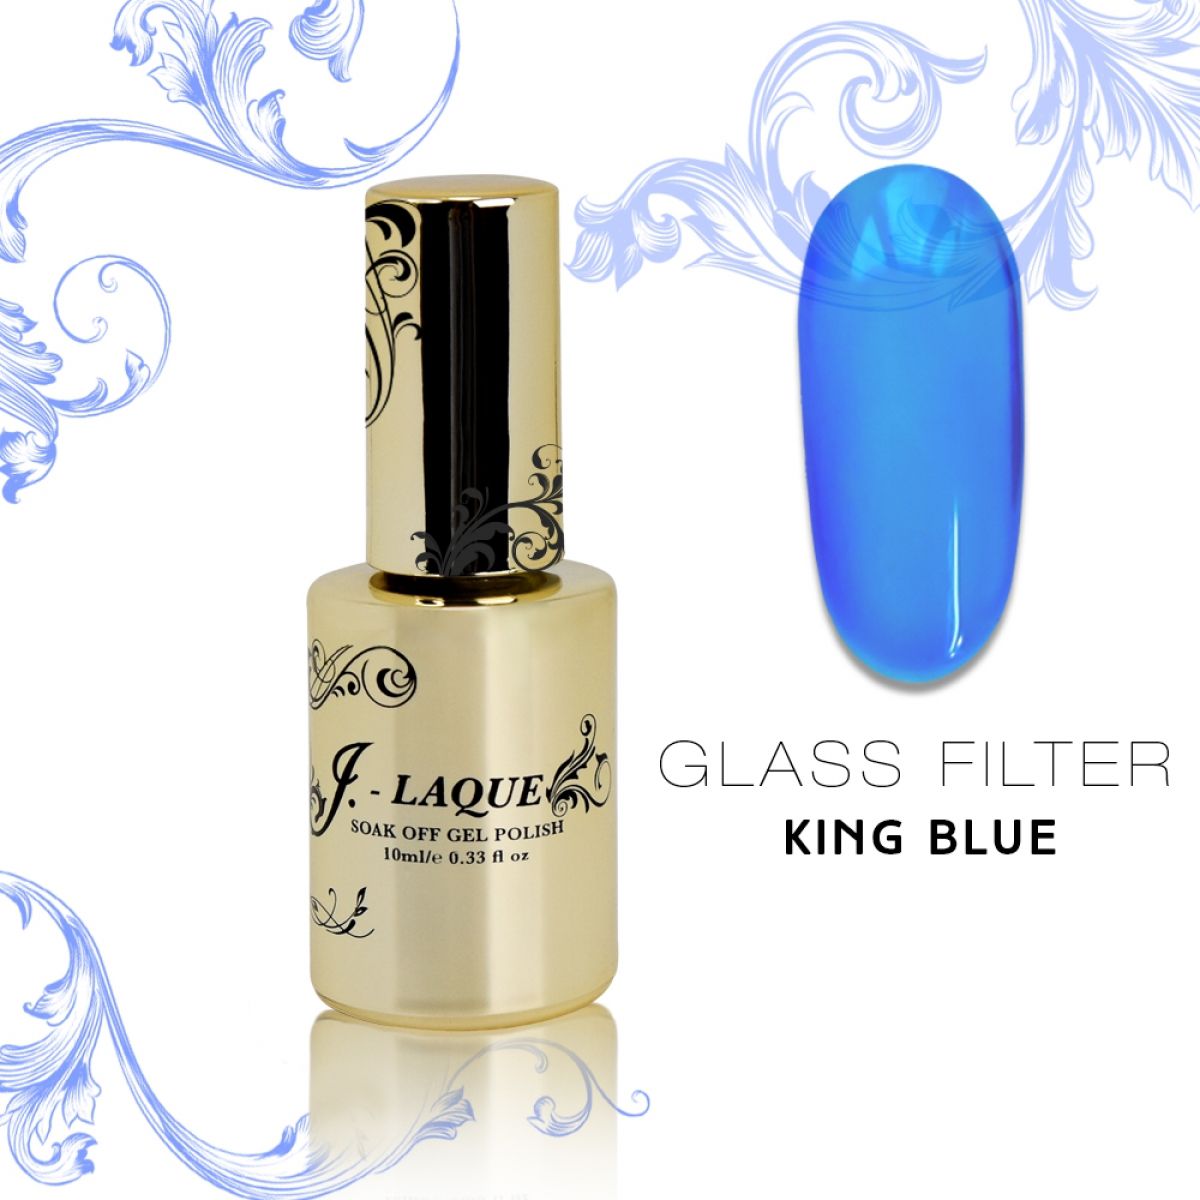 Glass Filter King Blue 10ml